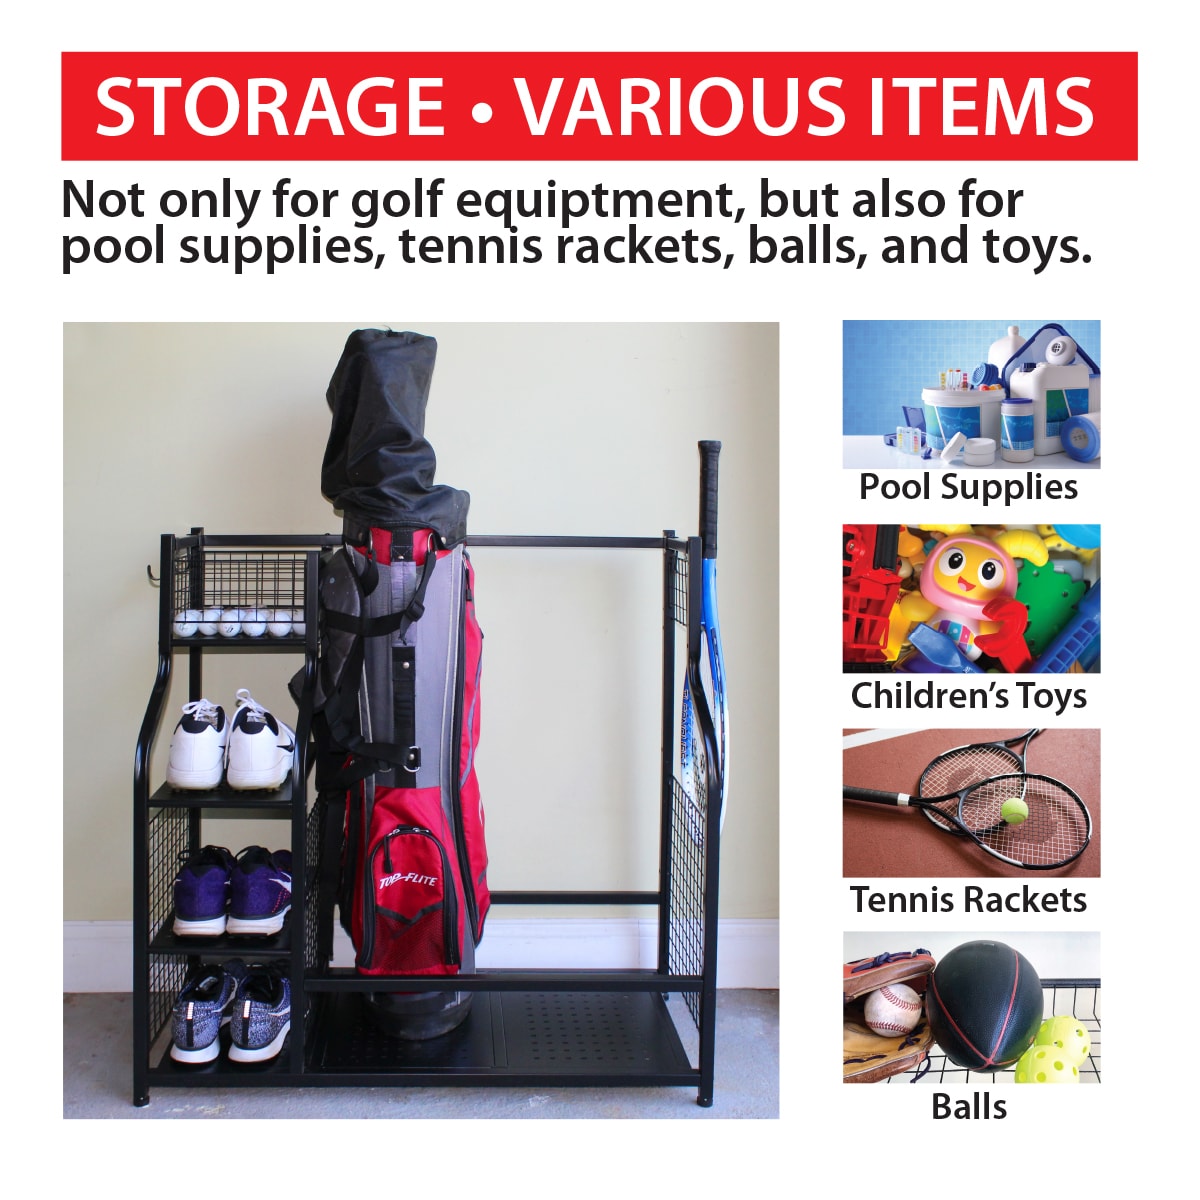 Golf Storage Organizer for Garage, Golf Bag Holder Club Organizer Rack,  Fits for 2 Golf Bags and Golf Equipment